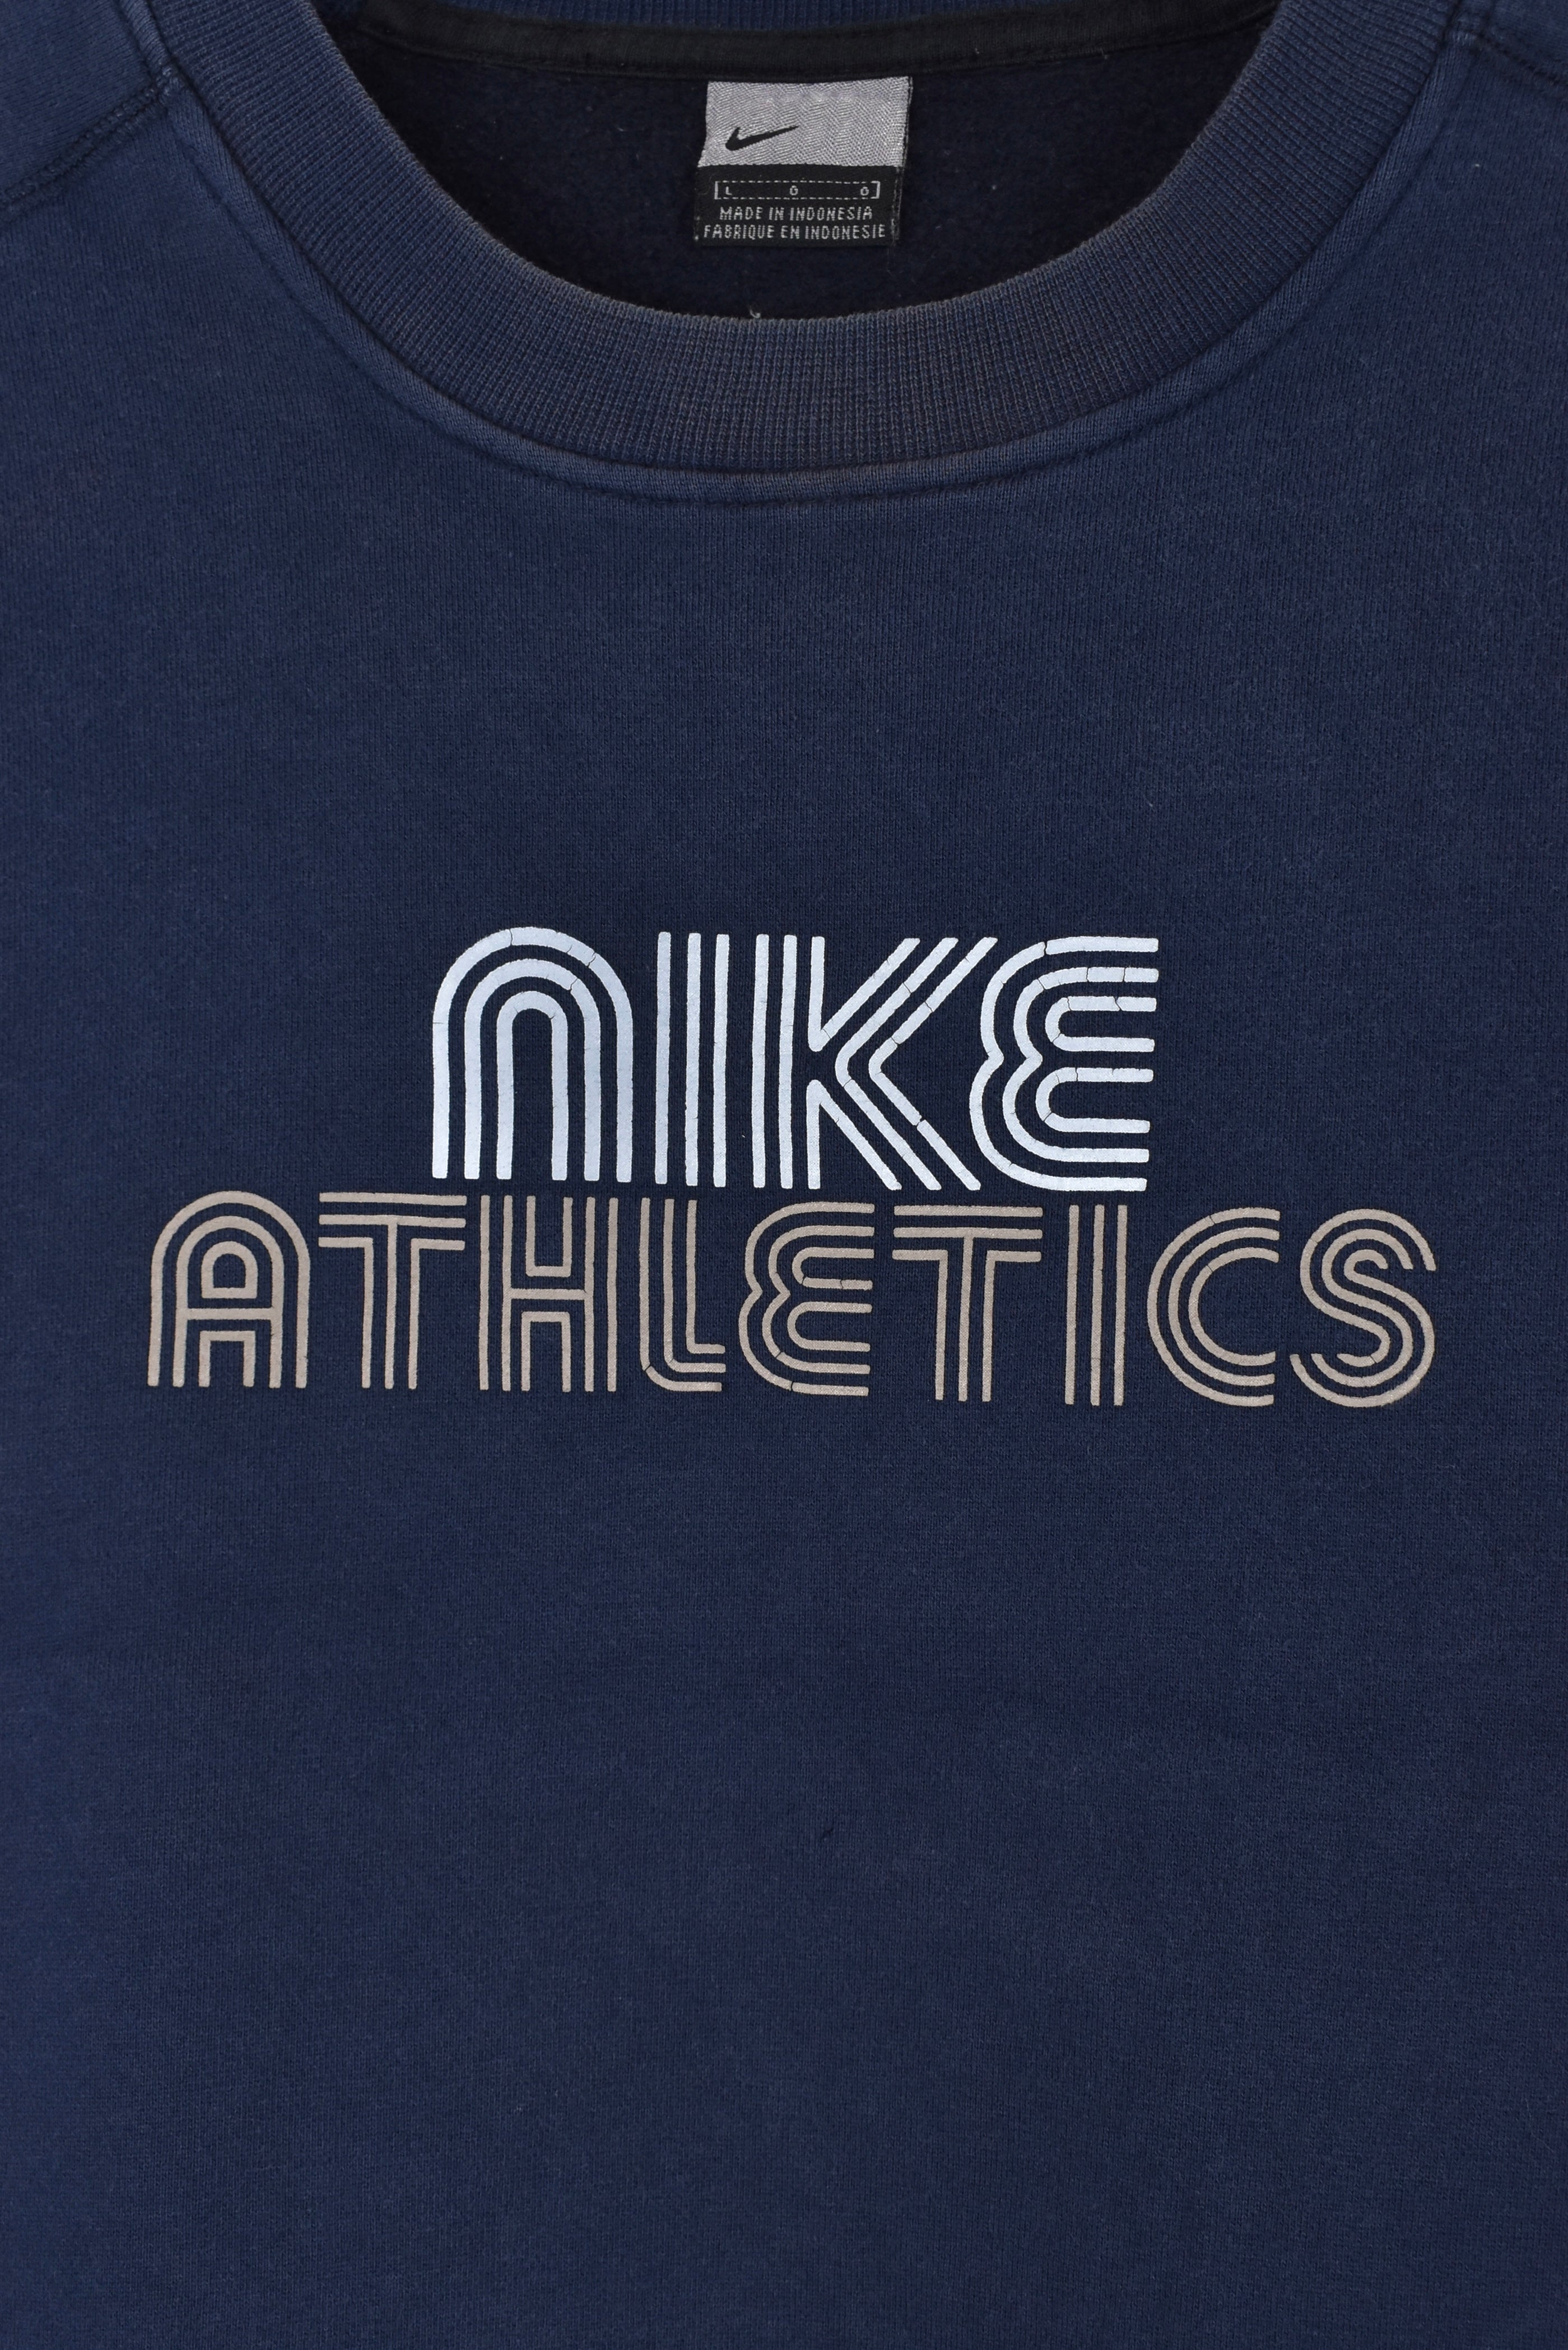 Vintage Nike sweatshirt, navy blue graphic crewneck - M/L